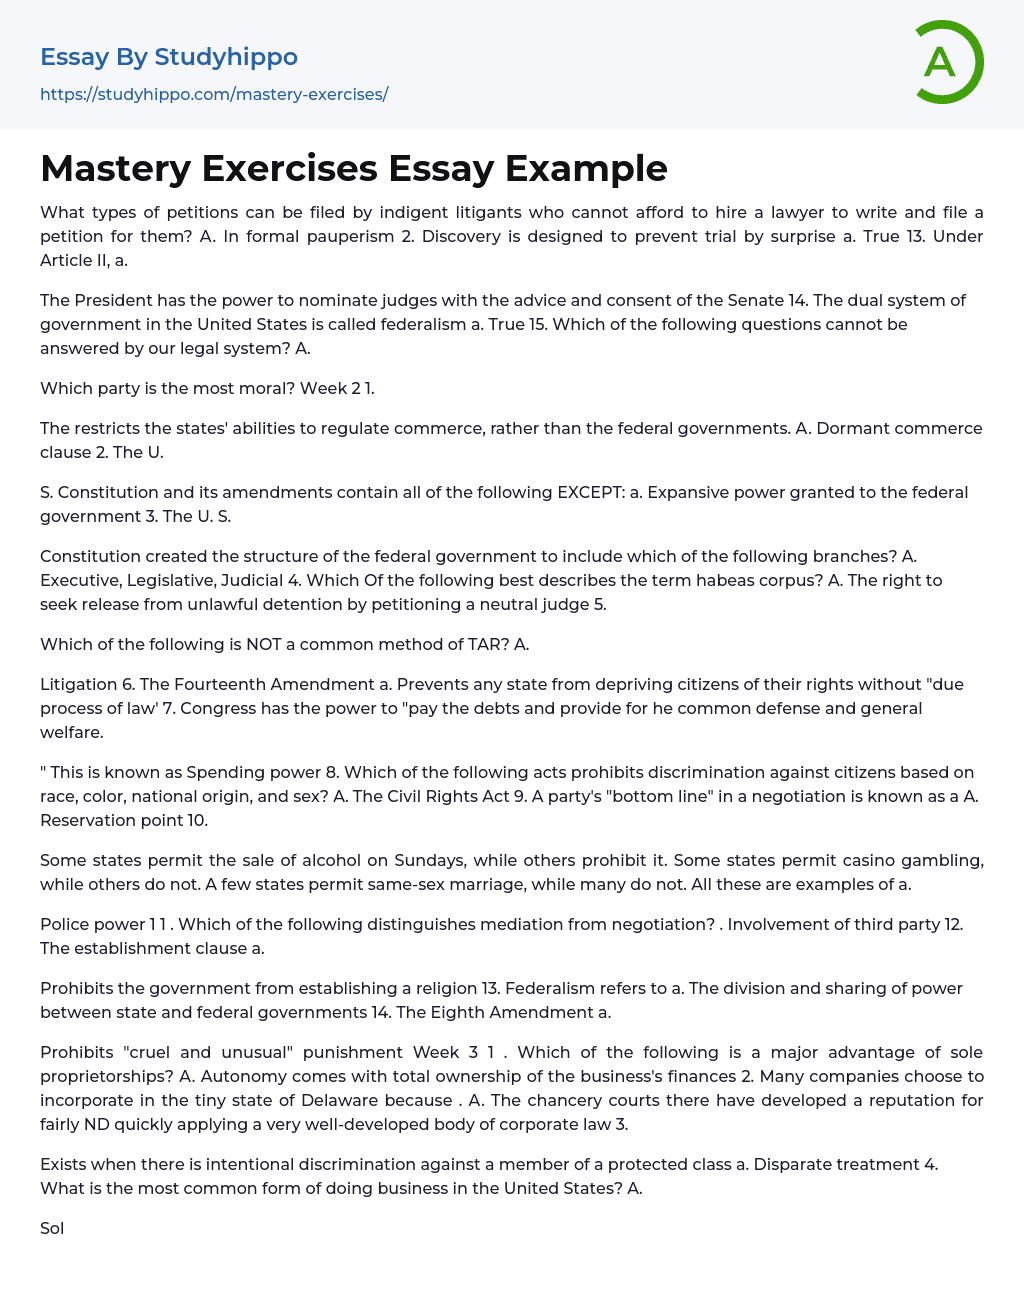 Mastery Exercises Essay Example